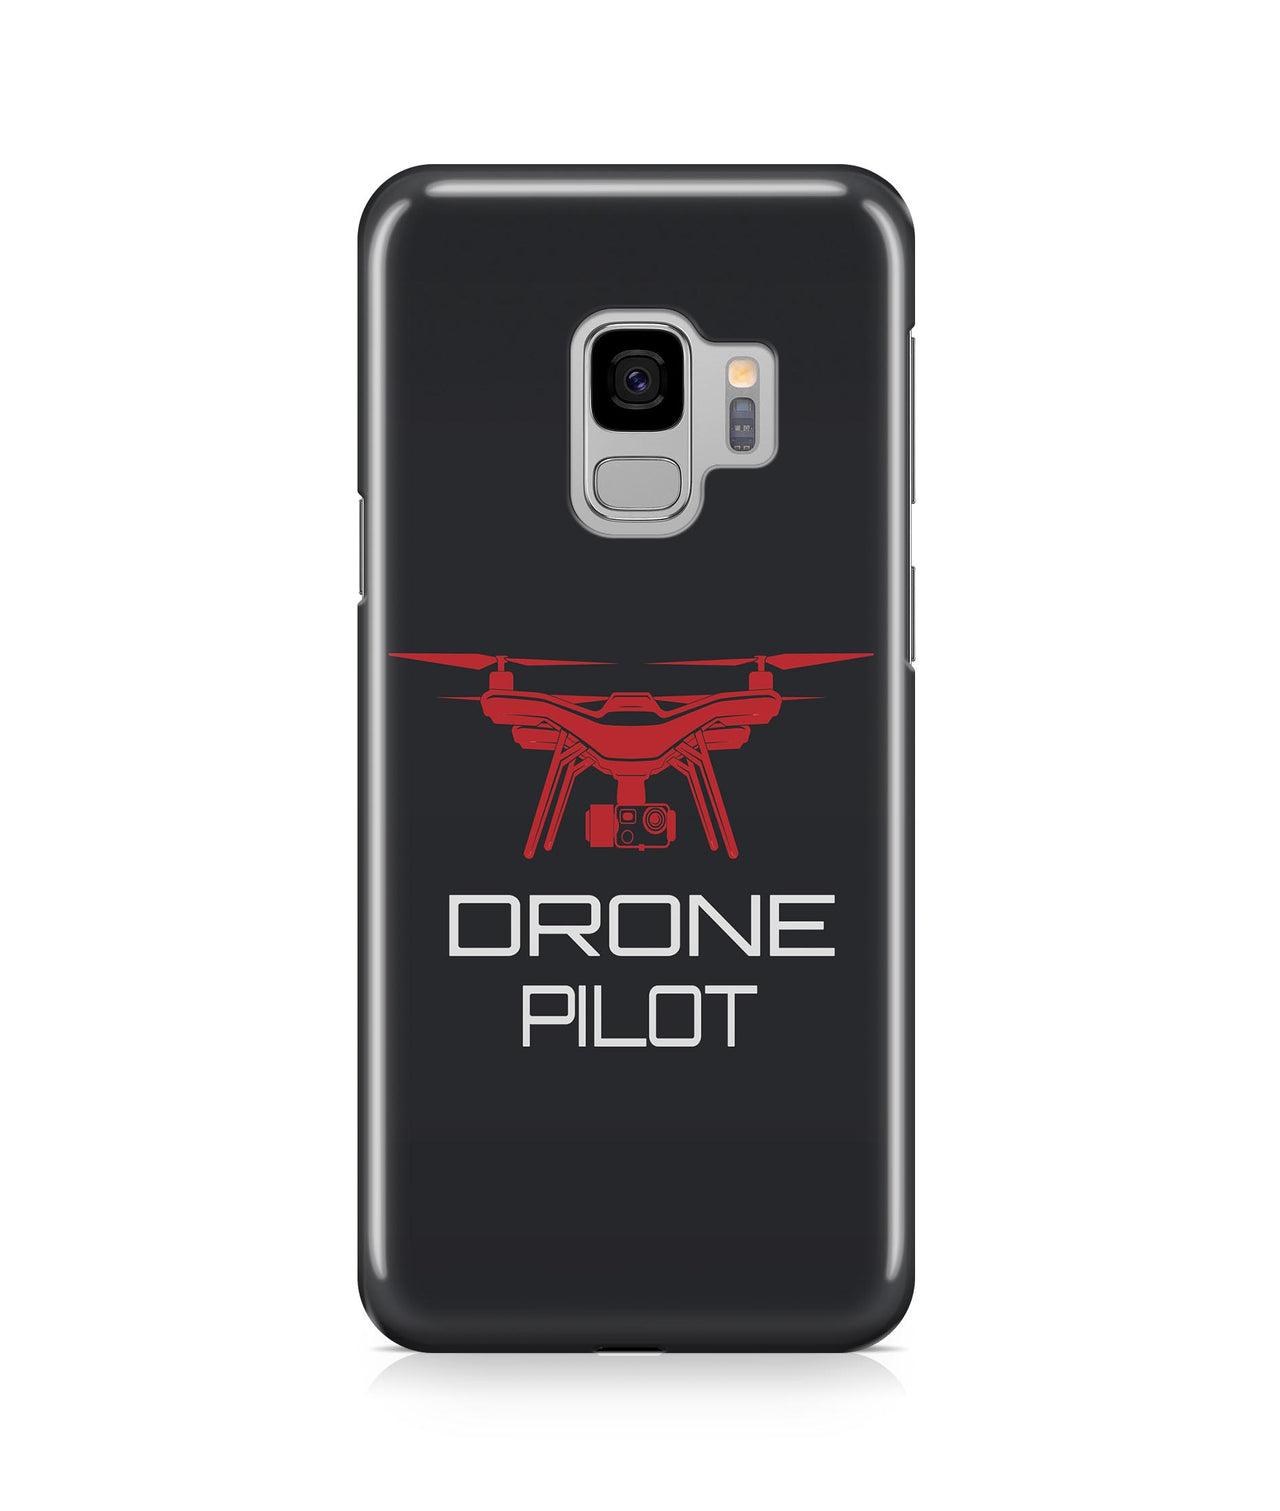 Drone Pilot Designed Samsung J Cases